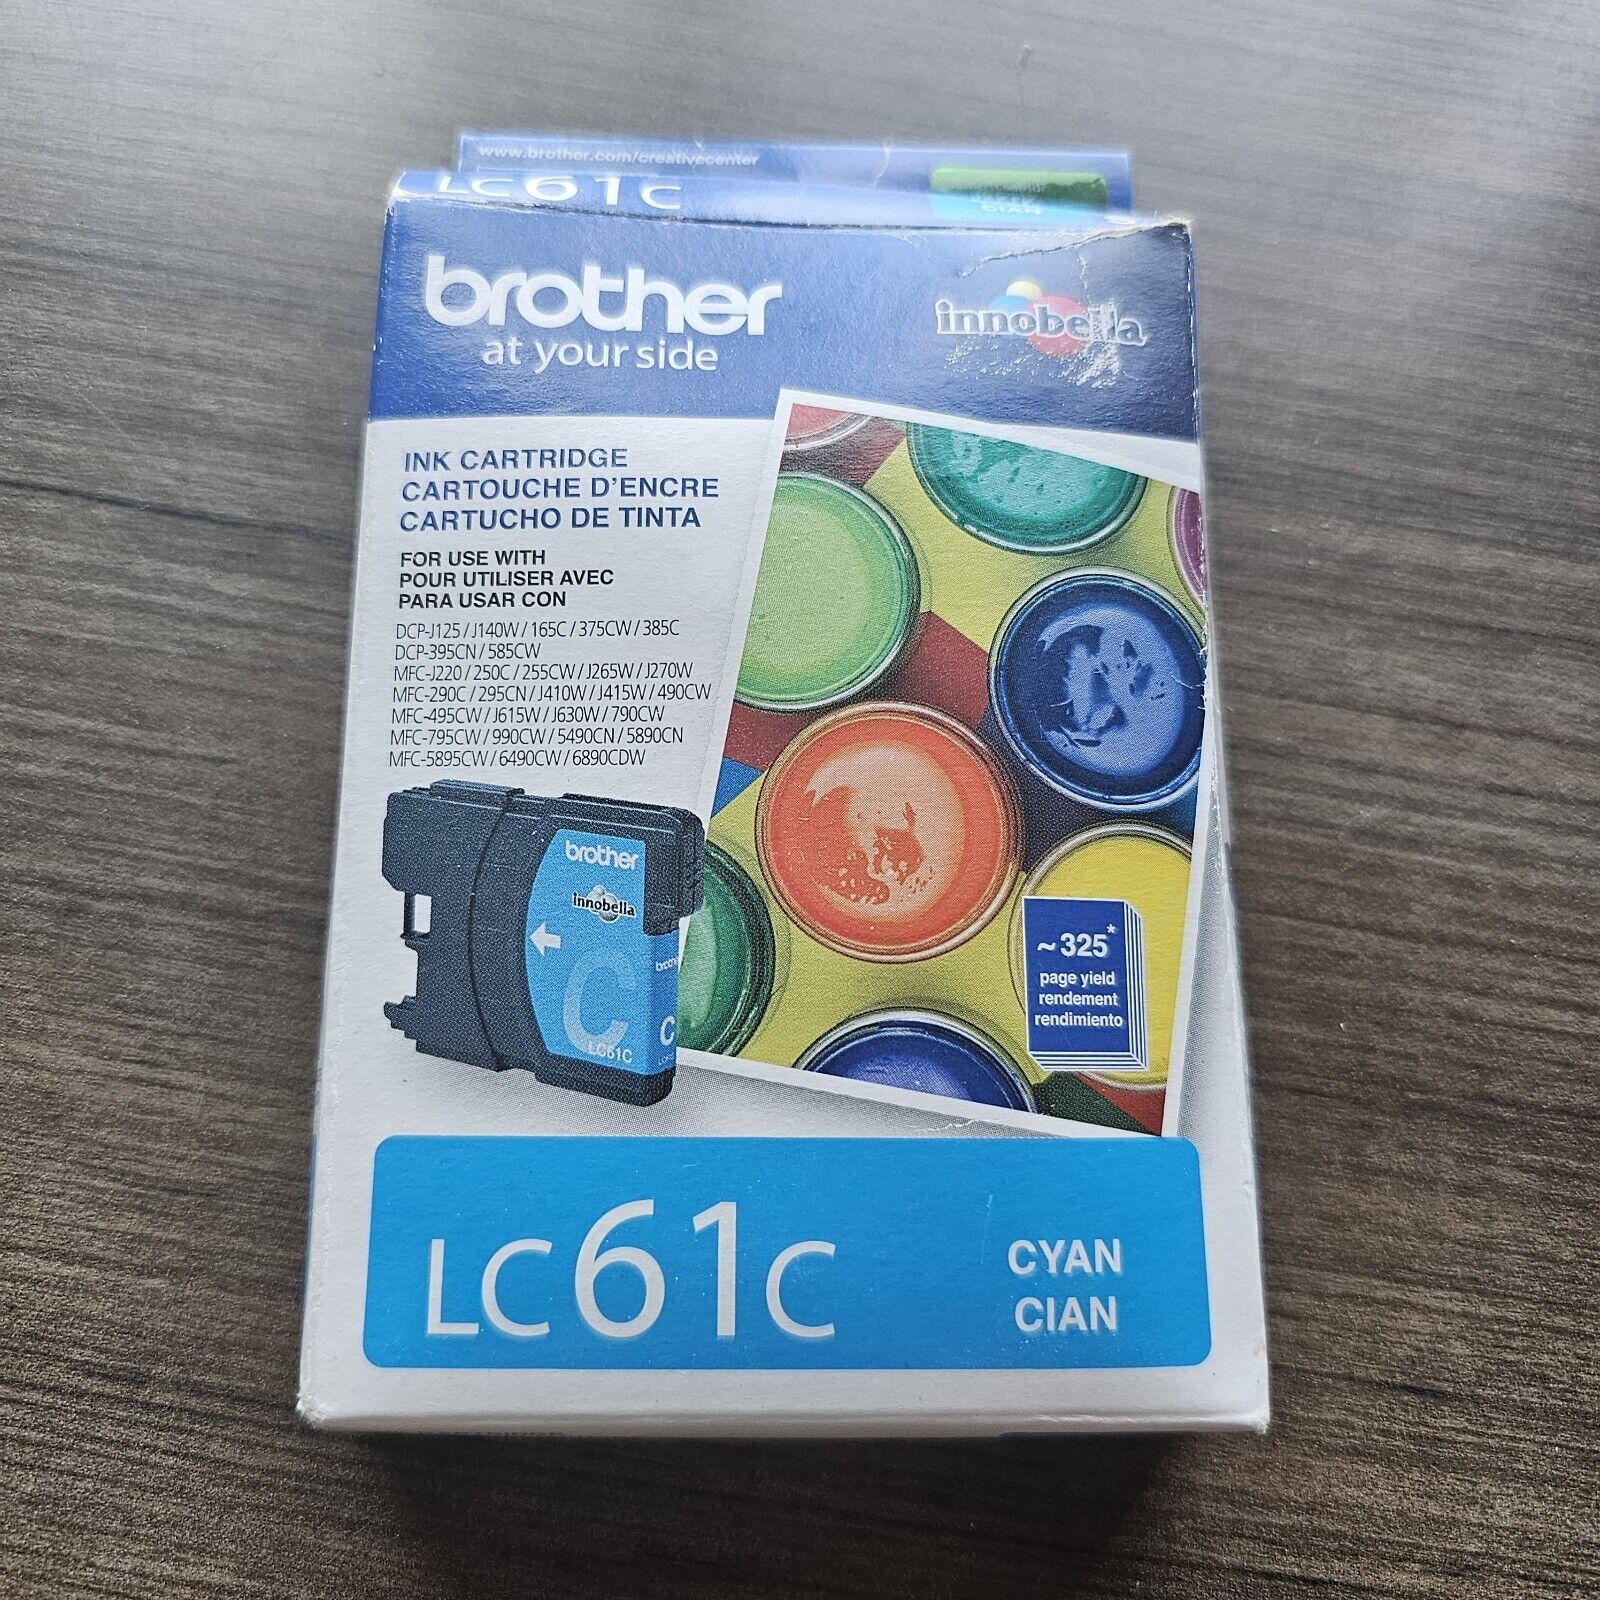 Brother LC61C Cyan Ink Cartridge Genuine EXP 01/22